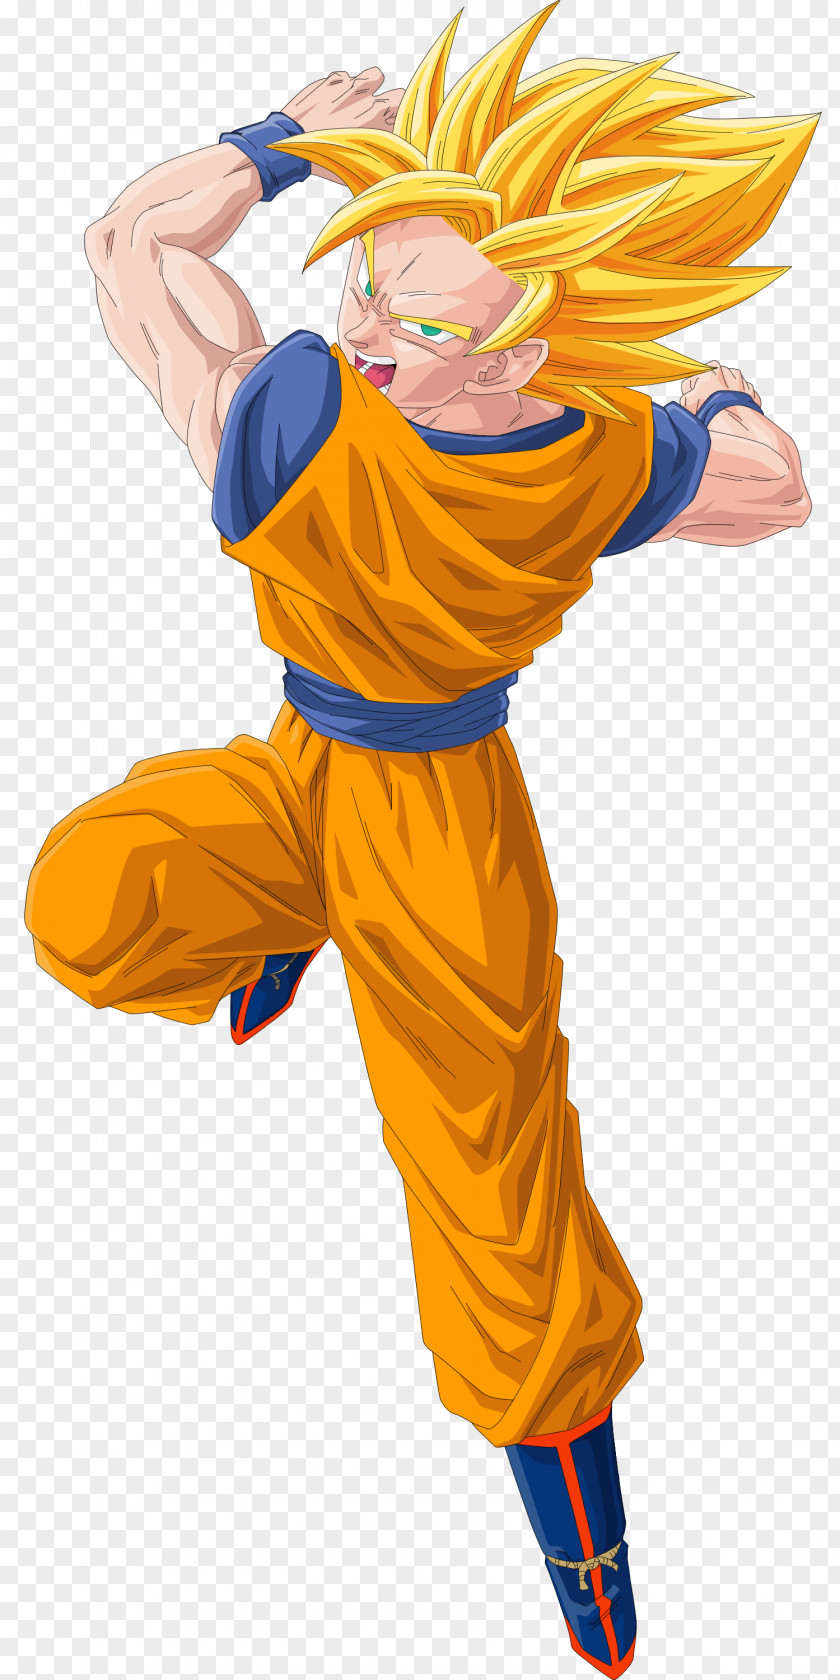 Dragon Ball Z Goku Vegeta Frieza Gohan Android 17 PNG